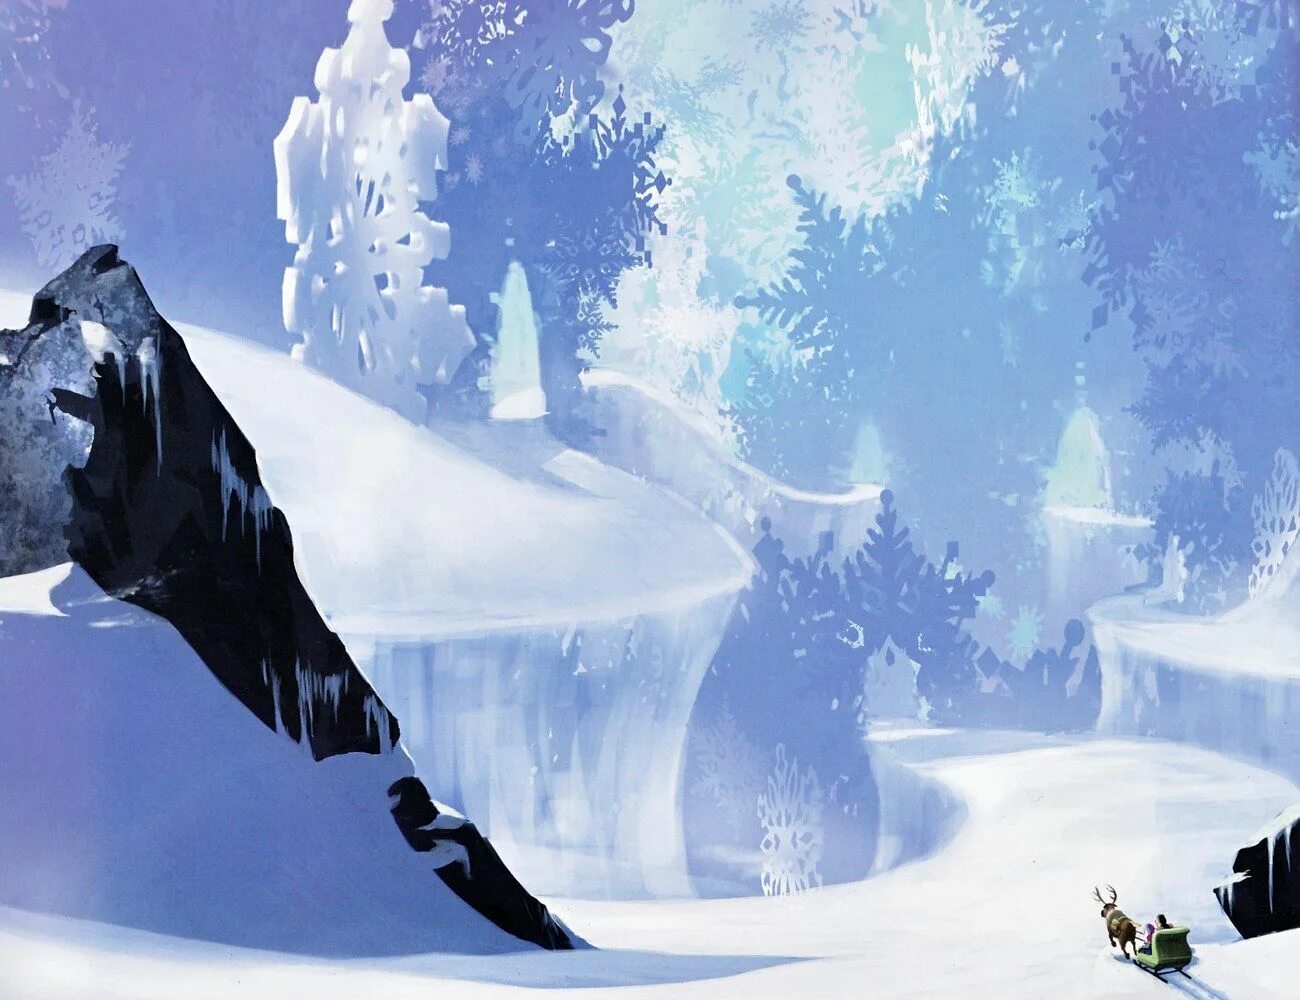 Spirit of the frozen. Frozen Concept. Frozen 2 Concept Art. Арт персонажа из игры Frozen City. Frozen Concept Art.